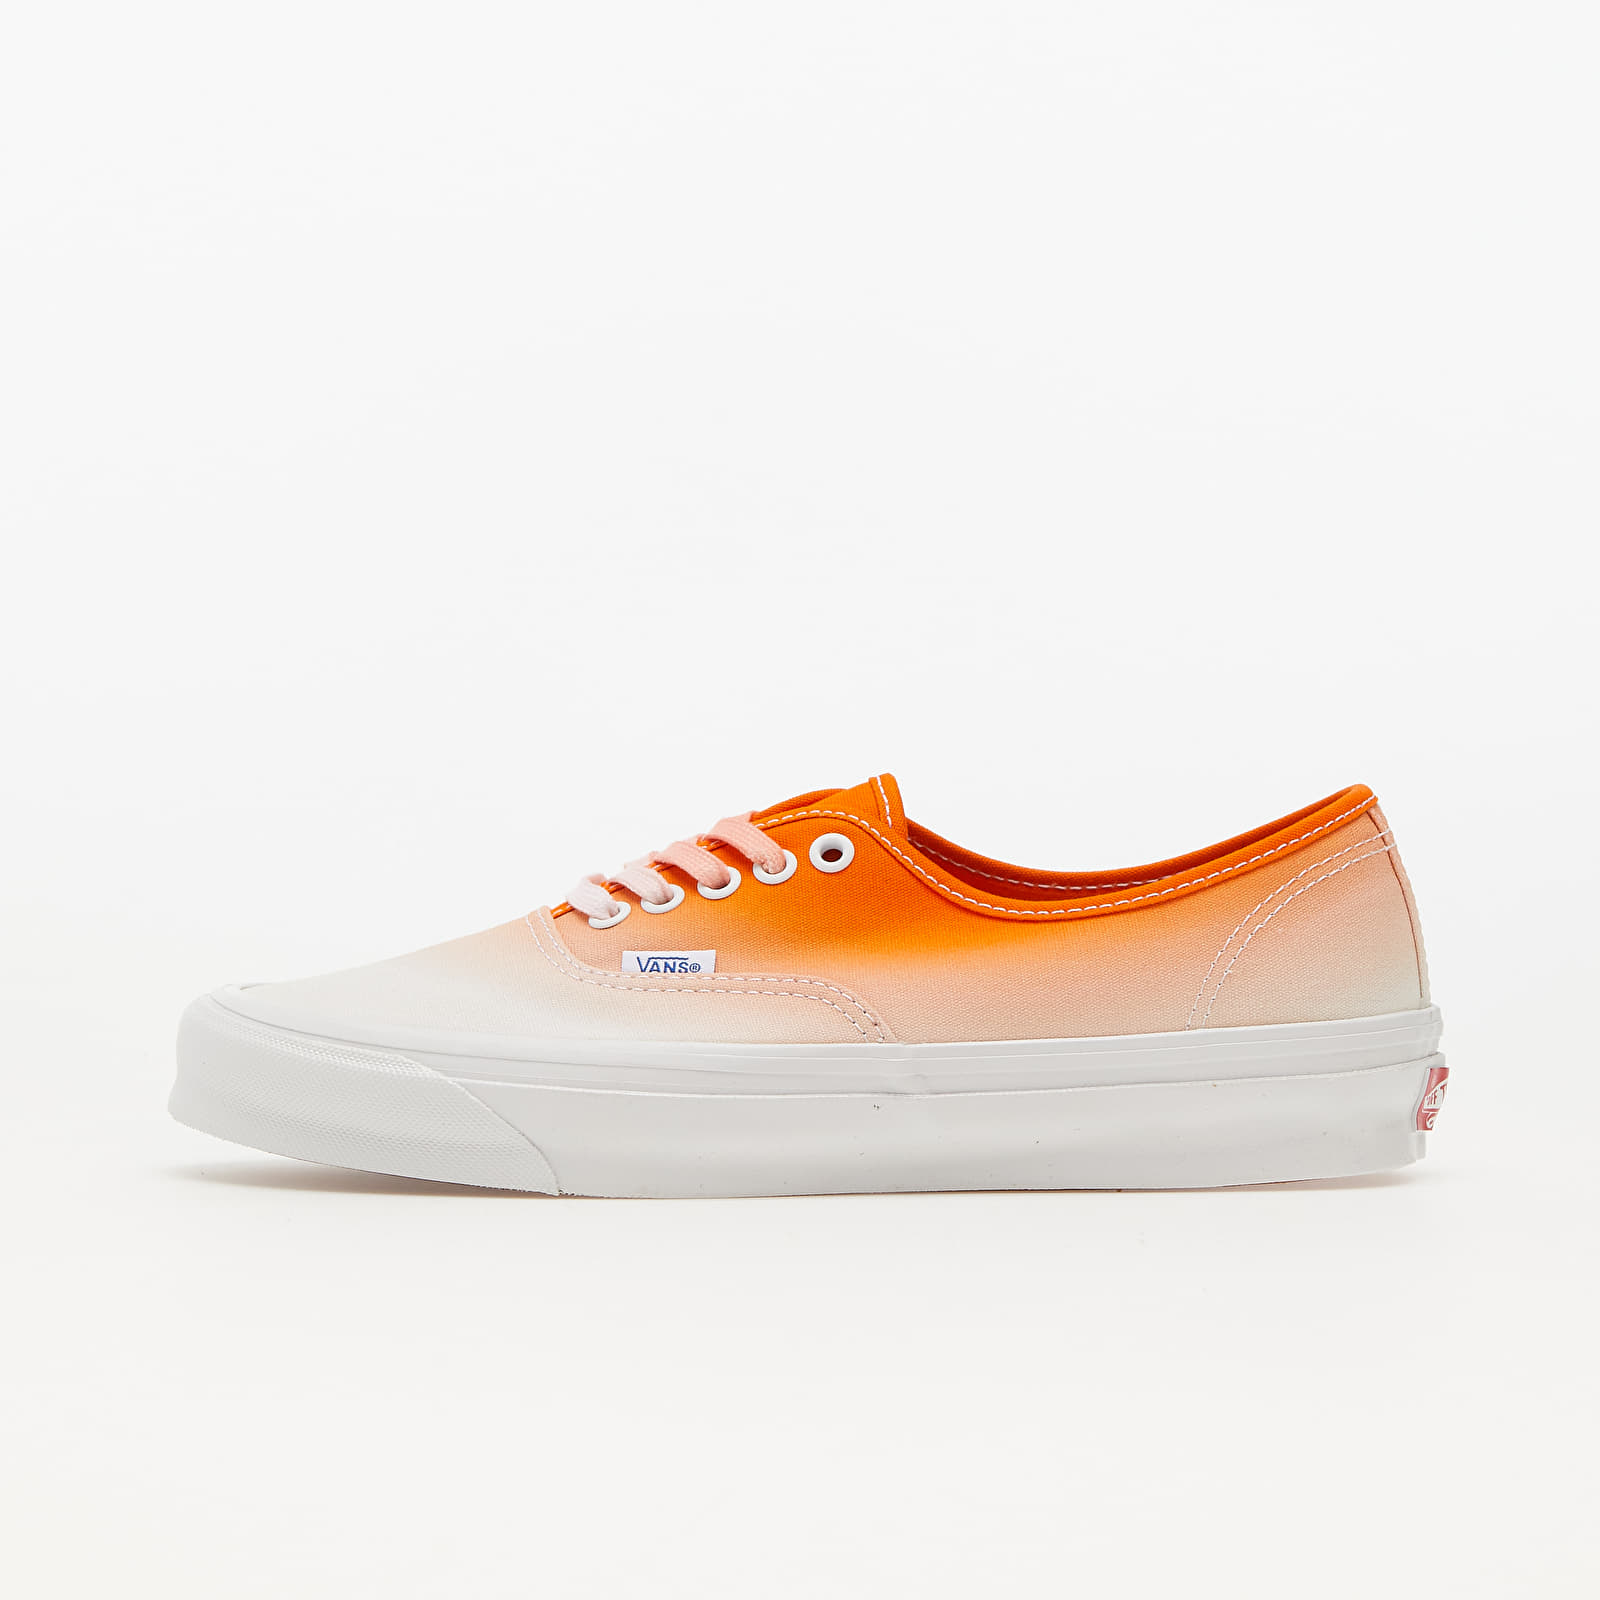 Chaussures et baskets homme Vans Vault OG Authentic LX (Dip Dye) Orange/ White